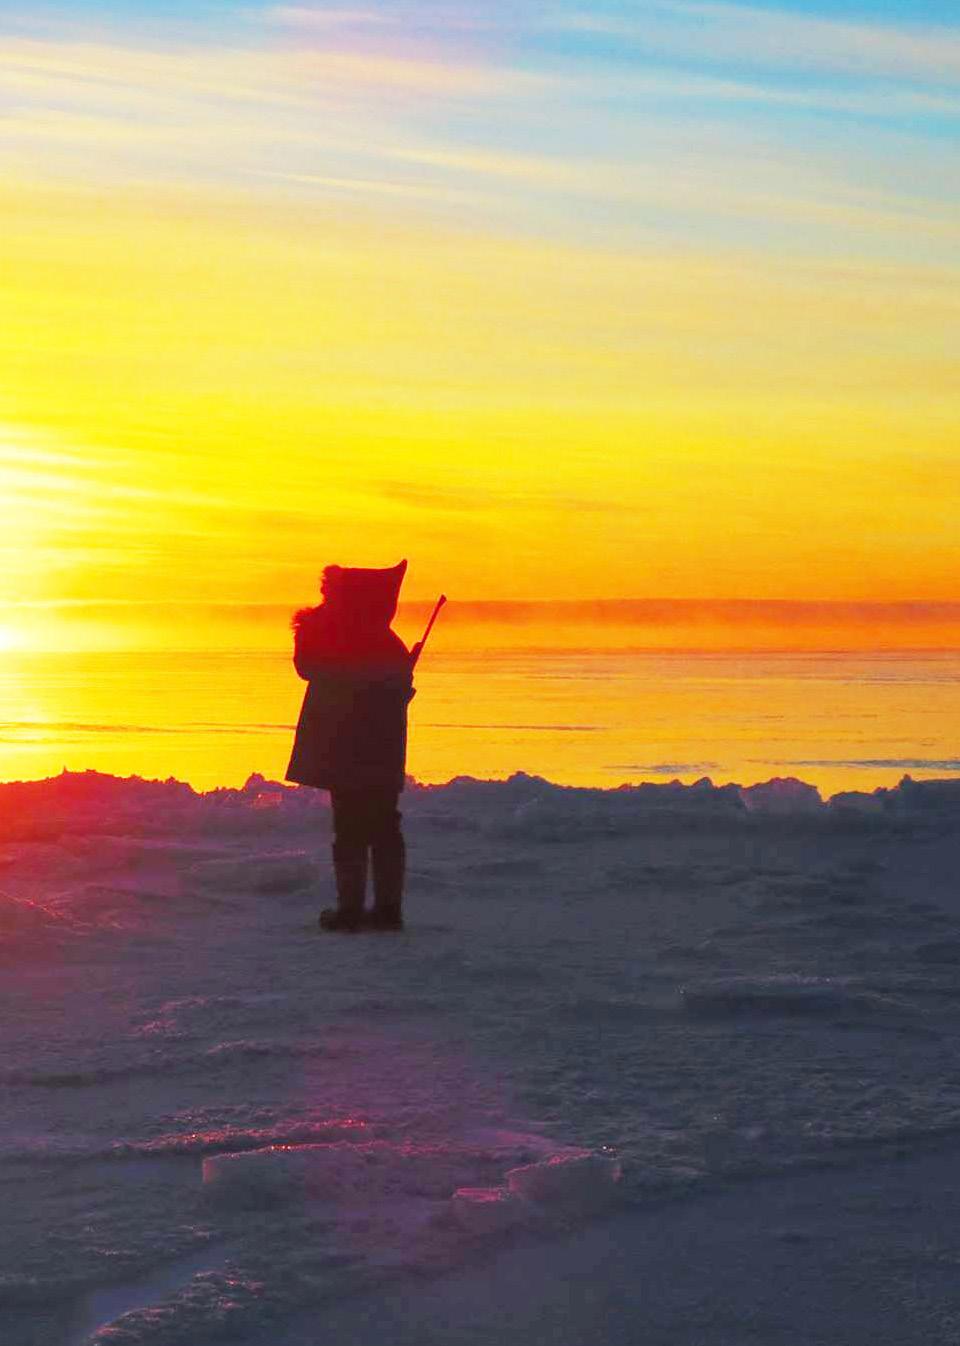 ᓄᓇᕗᒻᒥ ᐆᒪᔪᓕᕆᔨᕐᔪᐊᑦ ᑲᑎᒪᔨᖏᑦ Nunavutmi Uumayuliriyuakkut Katimajiit Nunavut